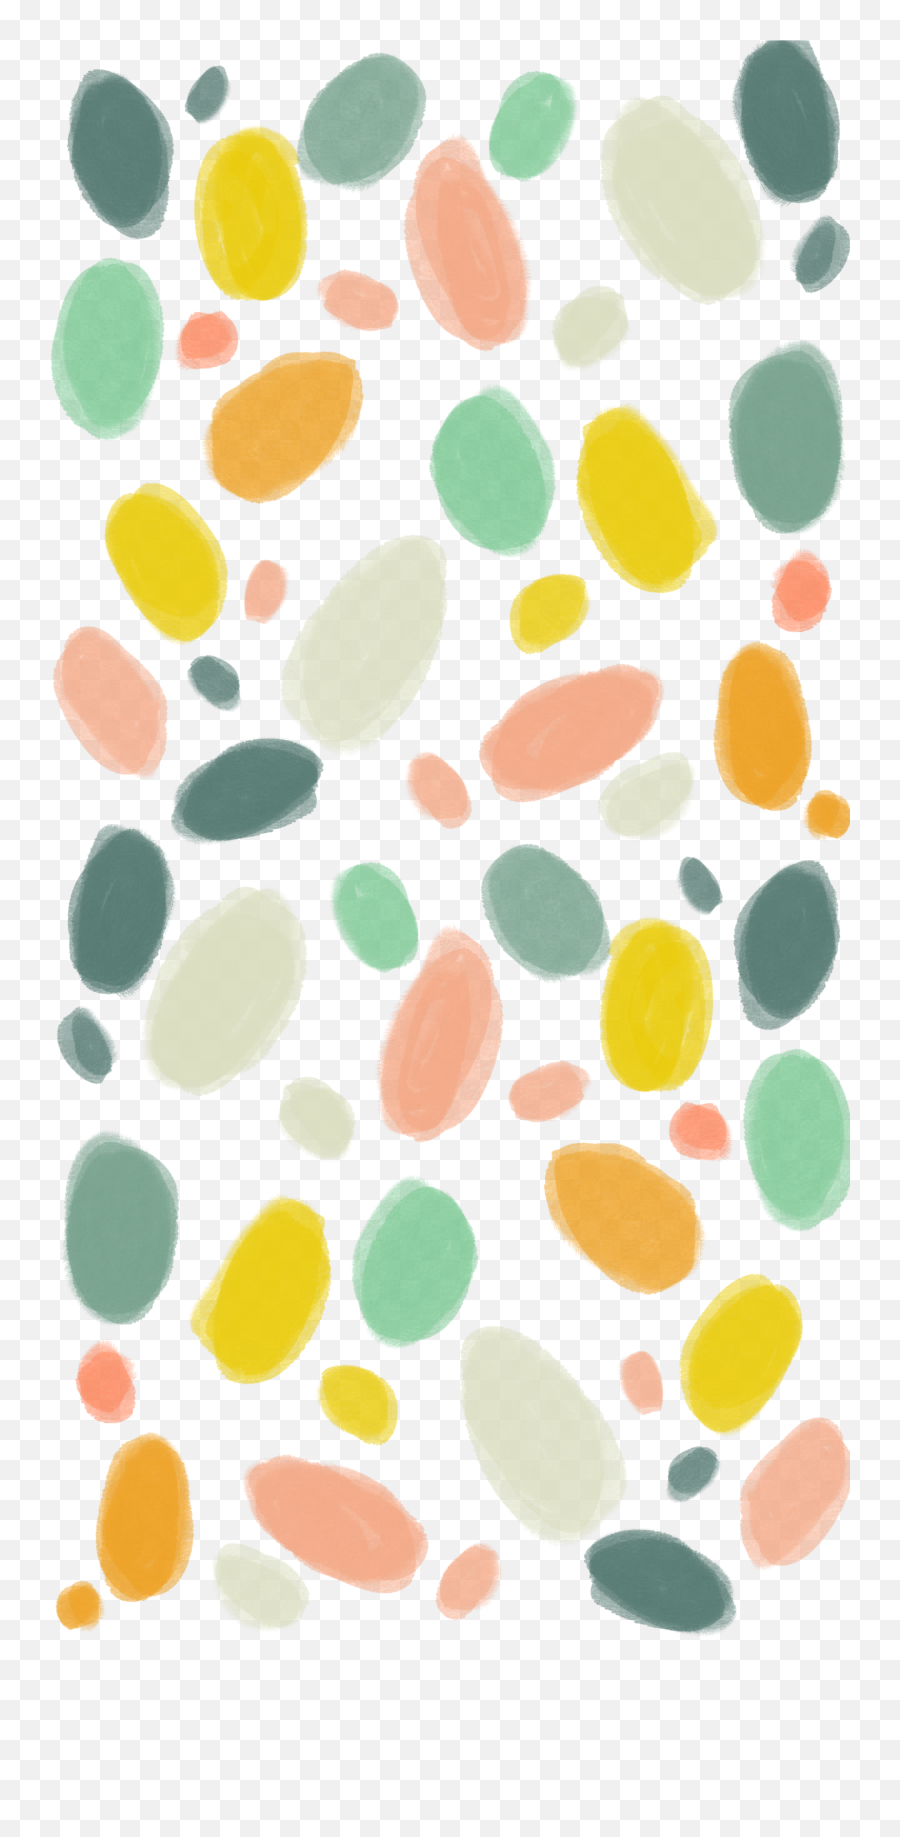 Painted Dots Casetify Iphone Art Design Illustration Emoji,Disney Emotions Color Coordination Tumblr